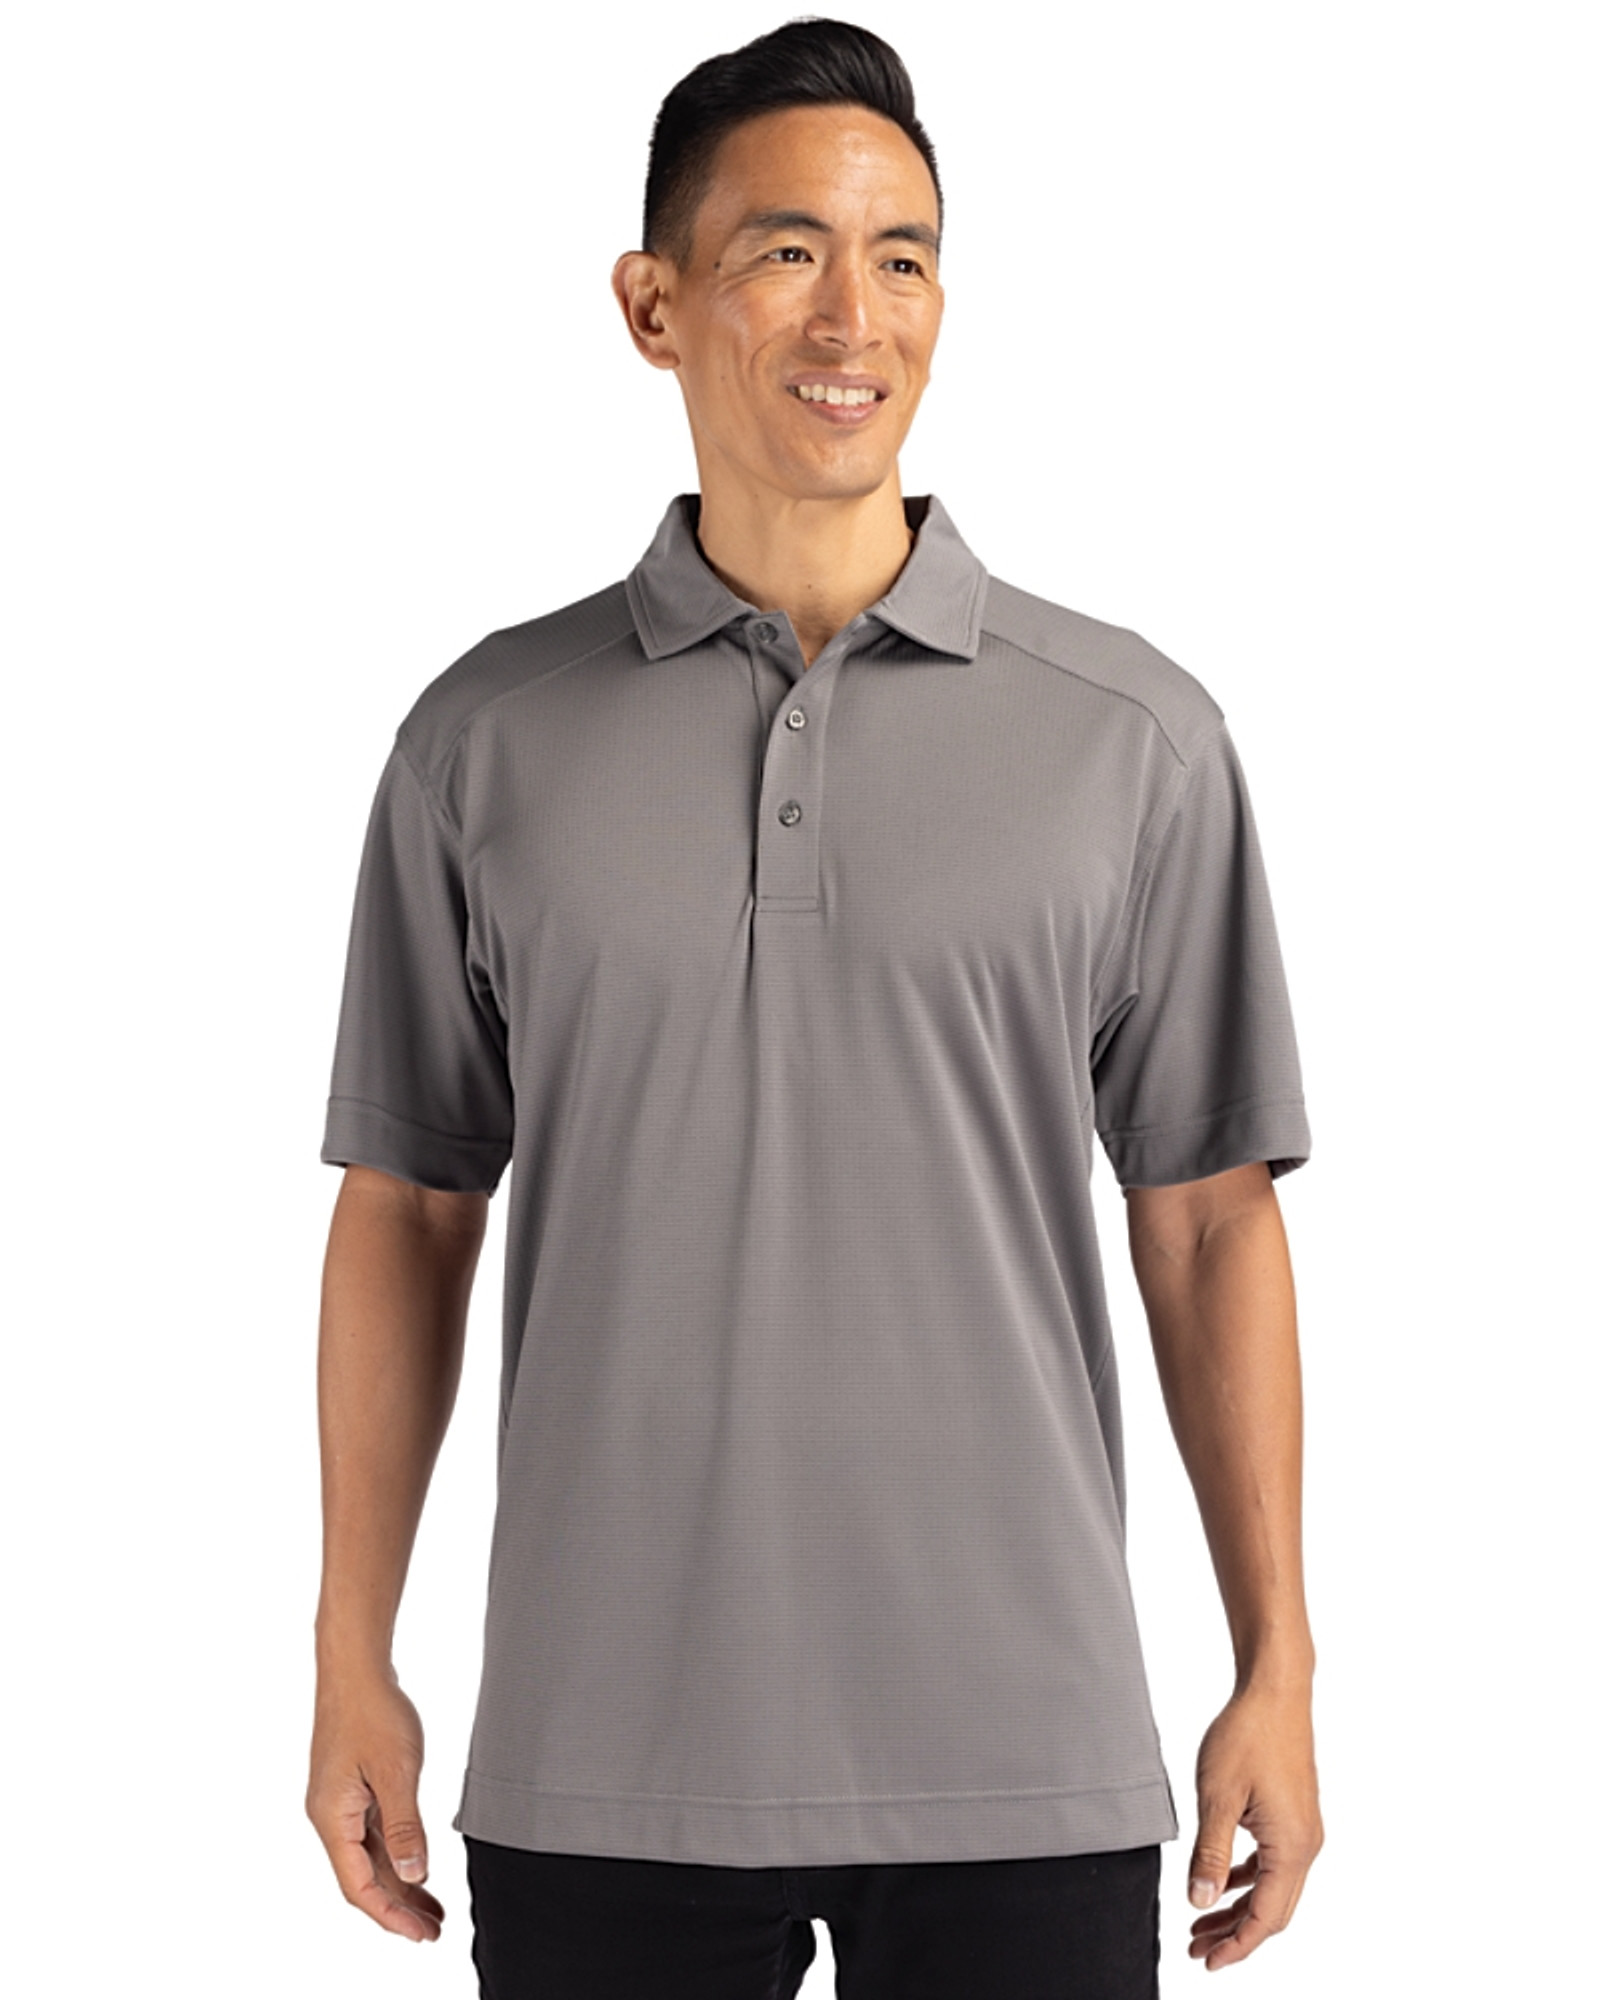 Chicago Cubs Golf Polo Shirt Performance Cool dry MENS unisex MEDIUM